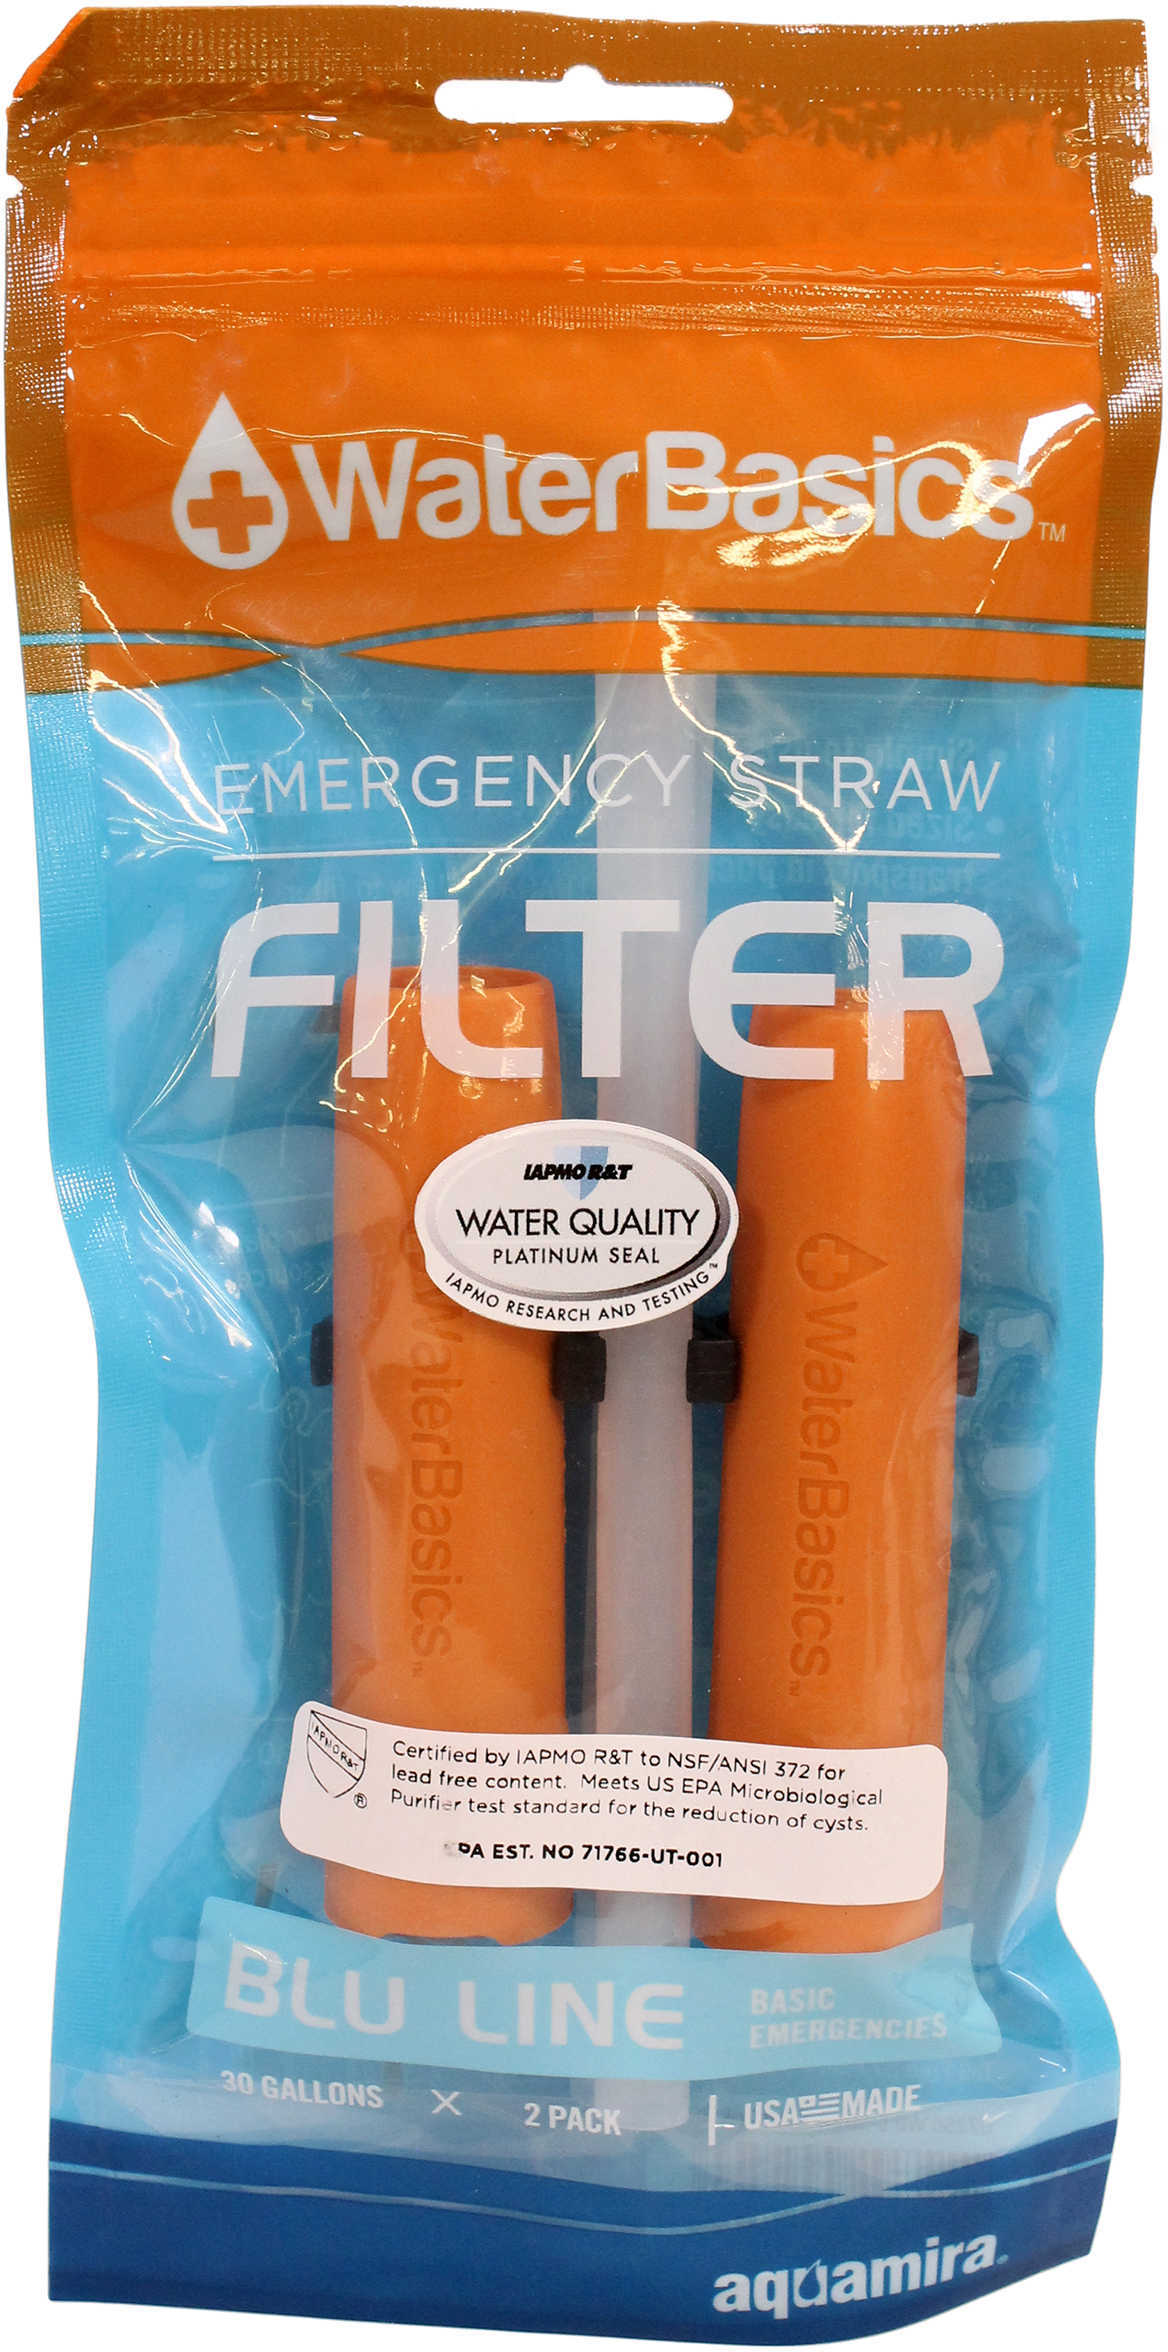 WaterBasics Emergency Straw Filter 2Pk.